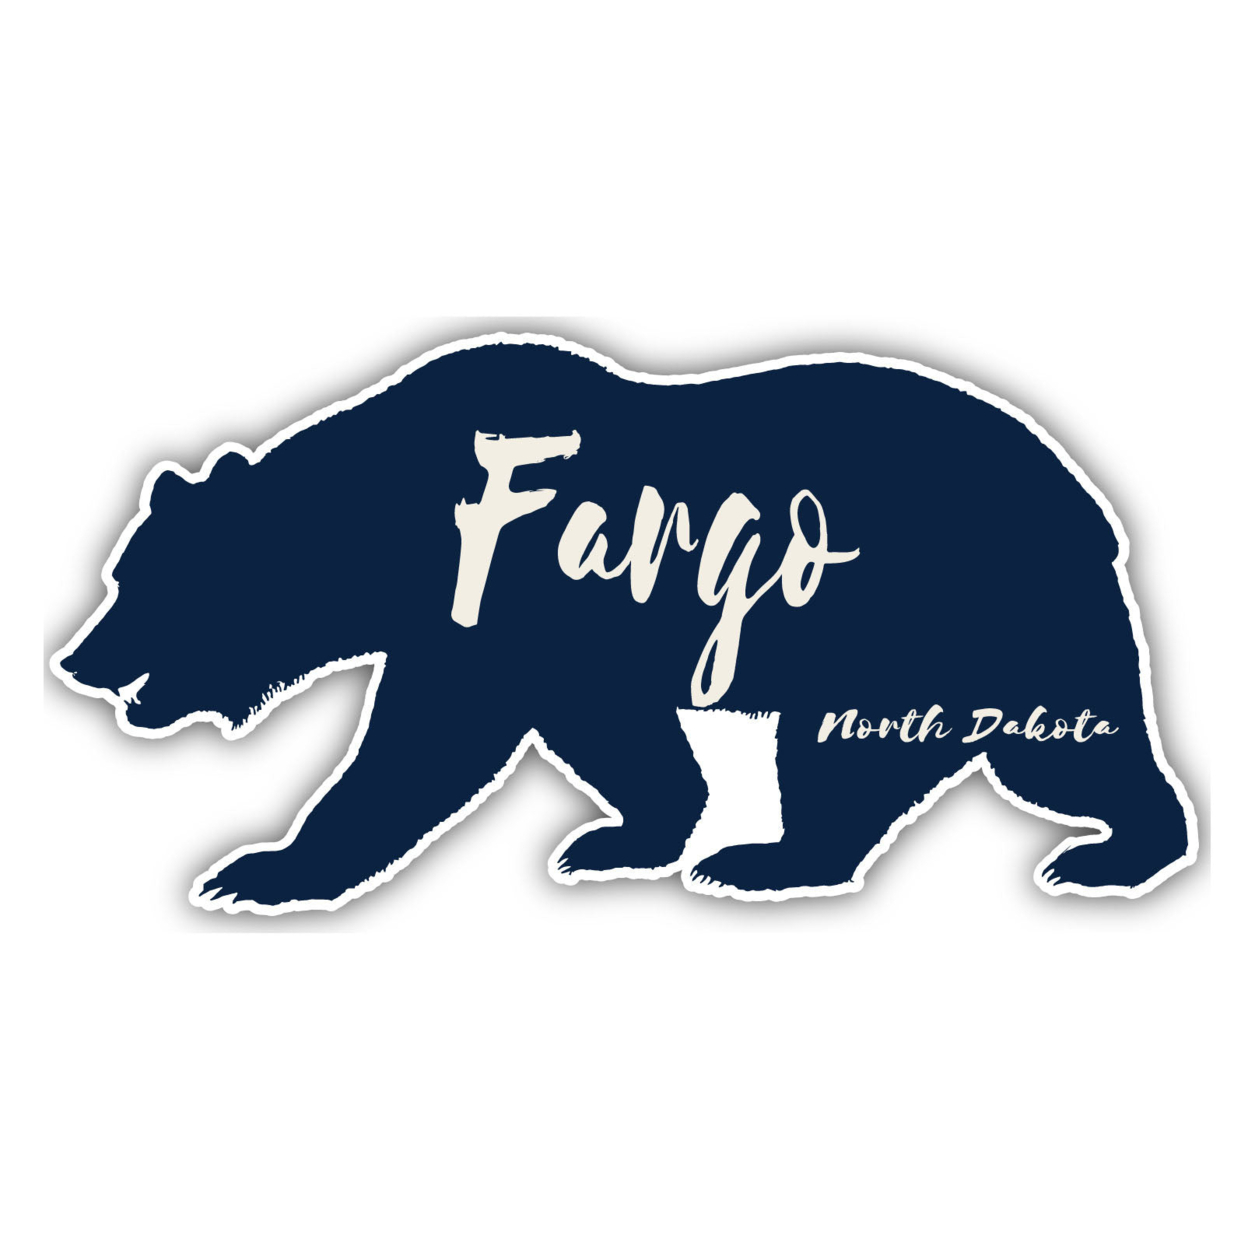 Fargo North Dakota Souvenir Decorative Stickers (Choose Theme And Size) - 4-Pack, 4-Inch, Tent